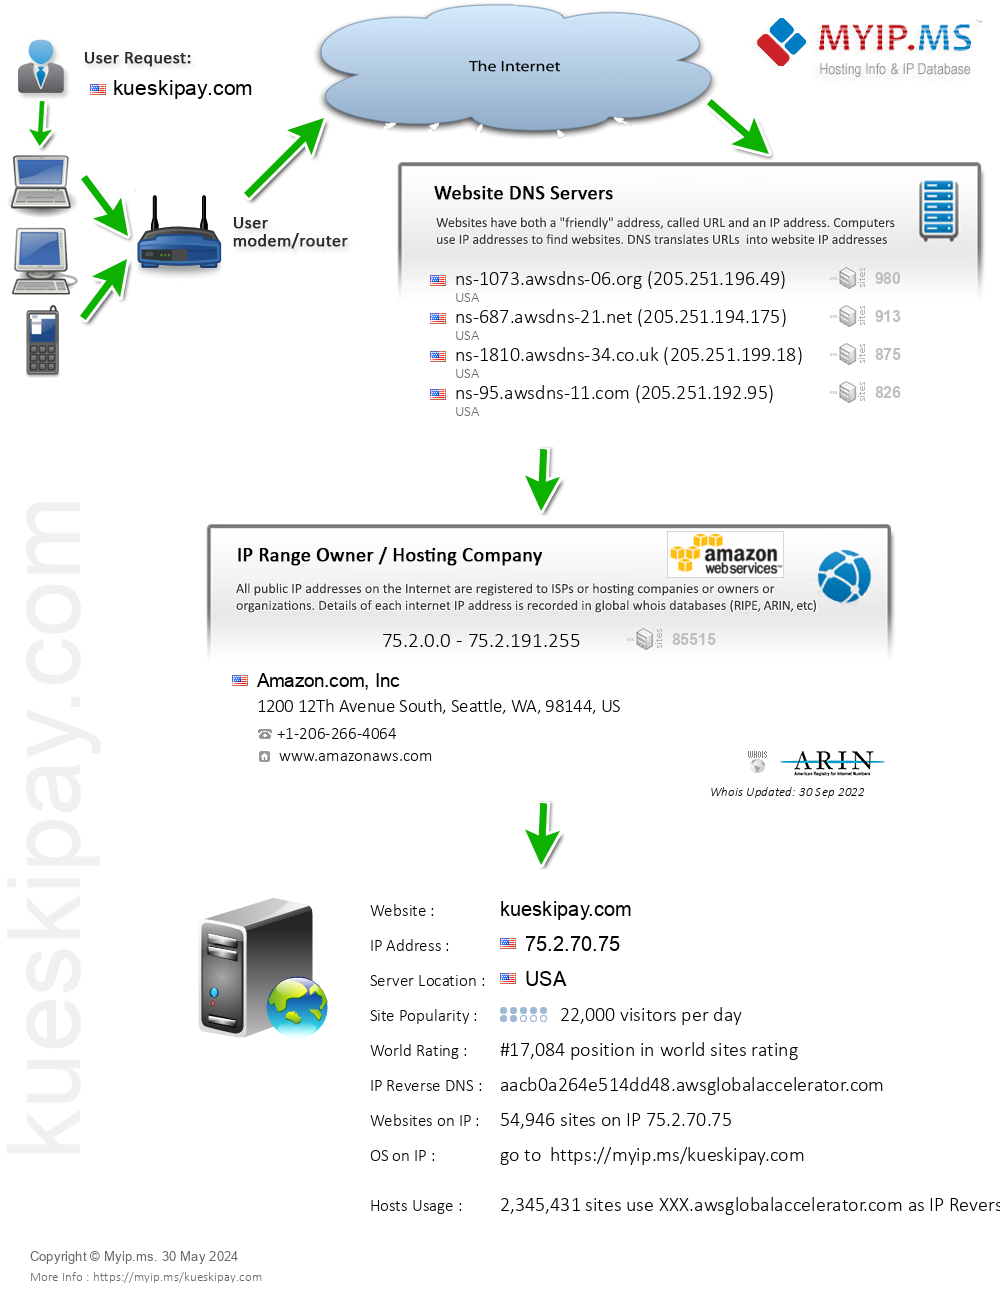 Kueskipay.com - Website Hosting Visual IP Diagram